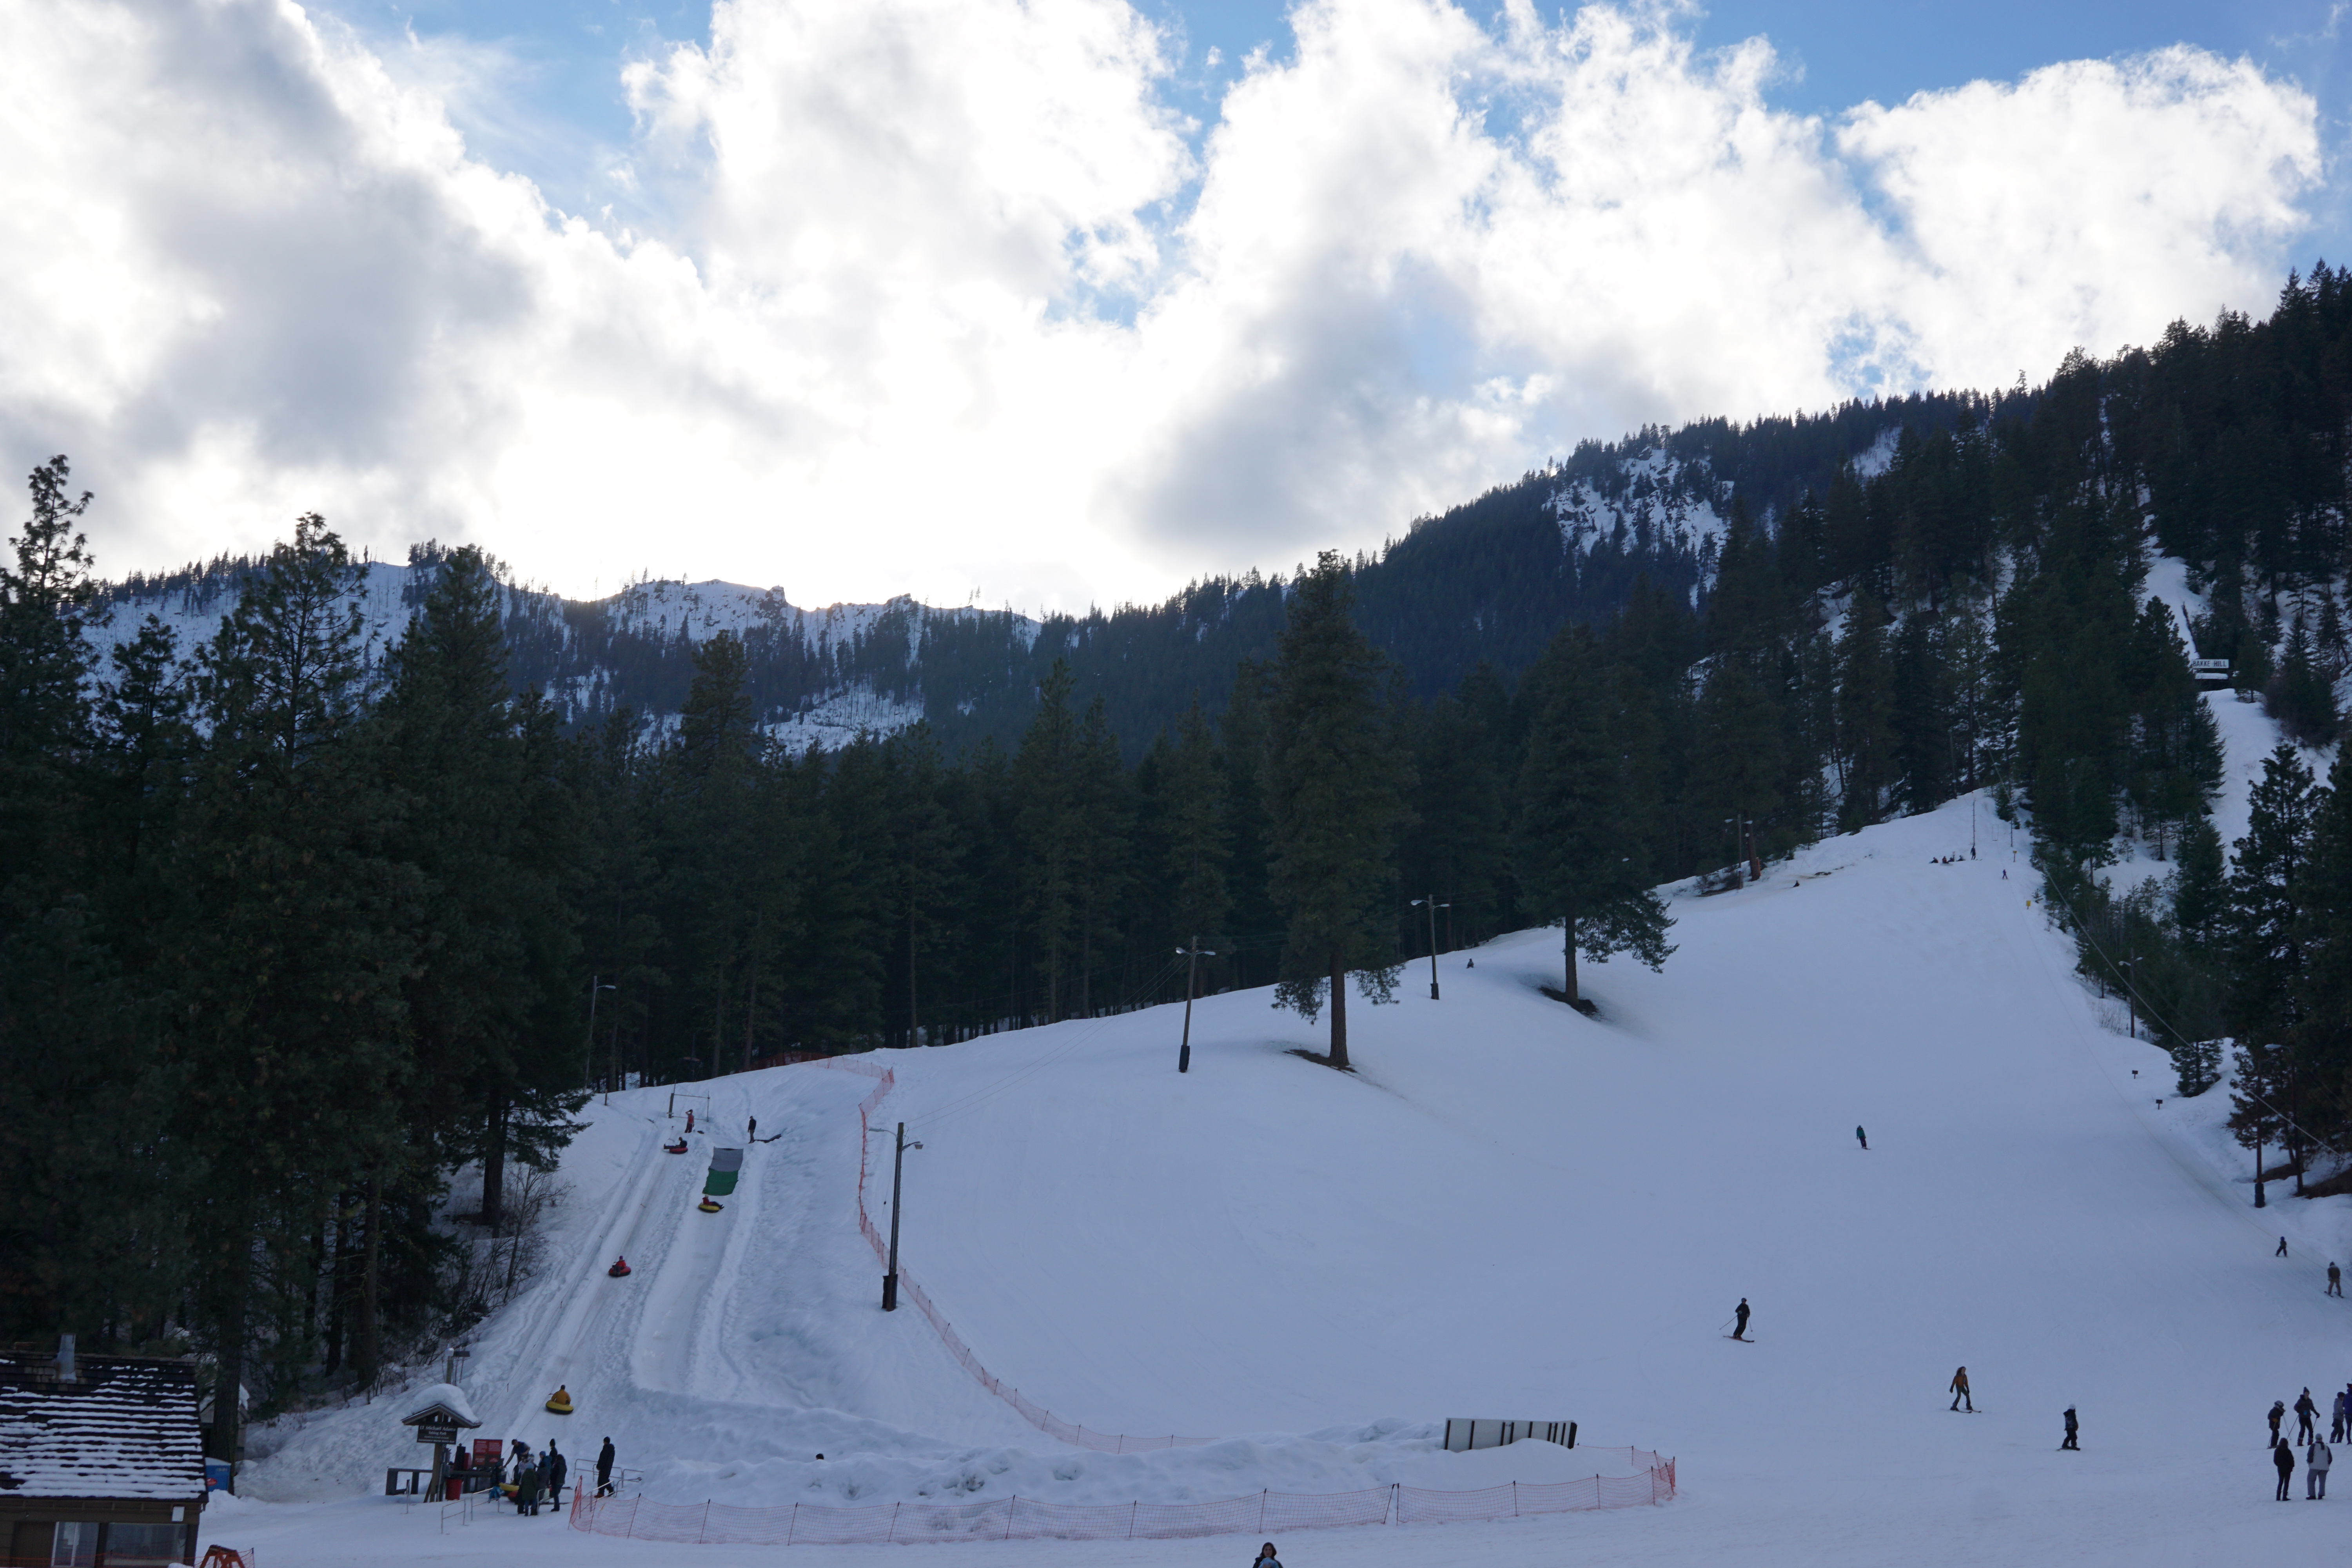 ski hill and tubing area